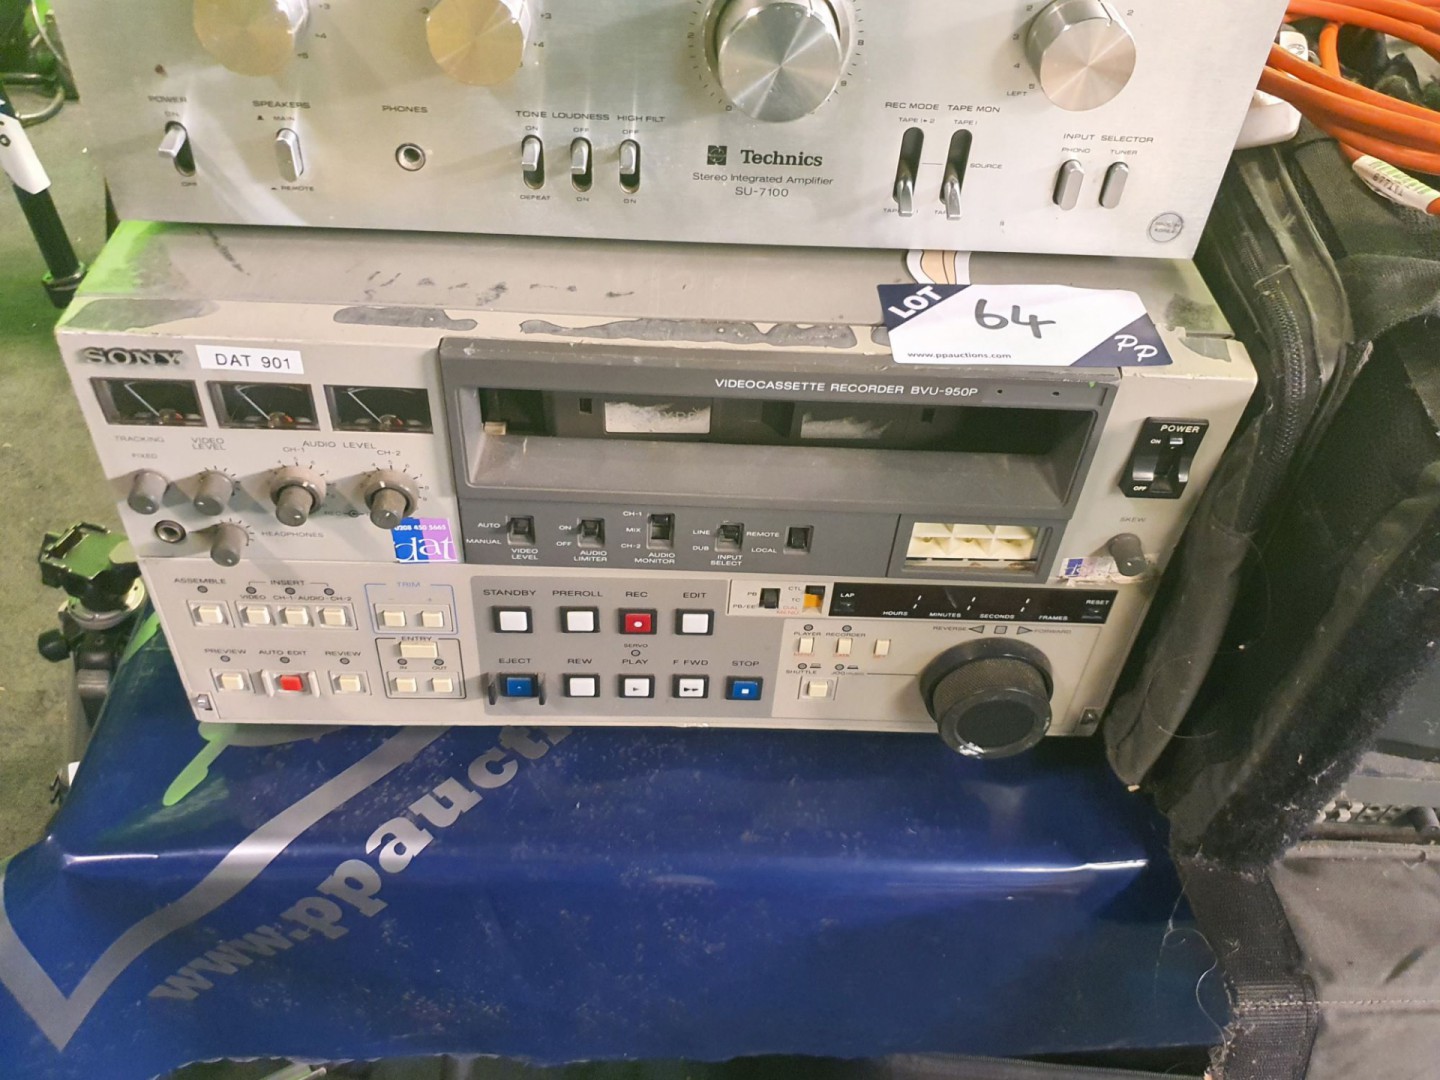 Sony BVU-950P video cassette recorder